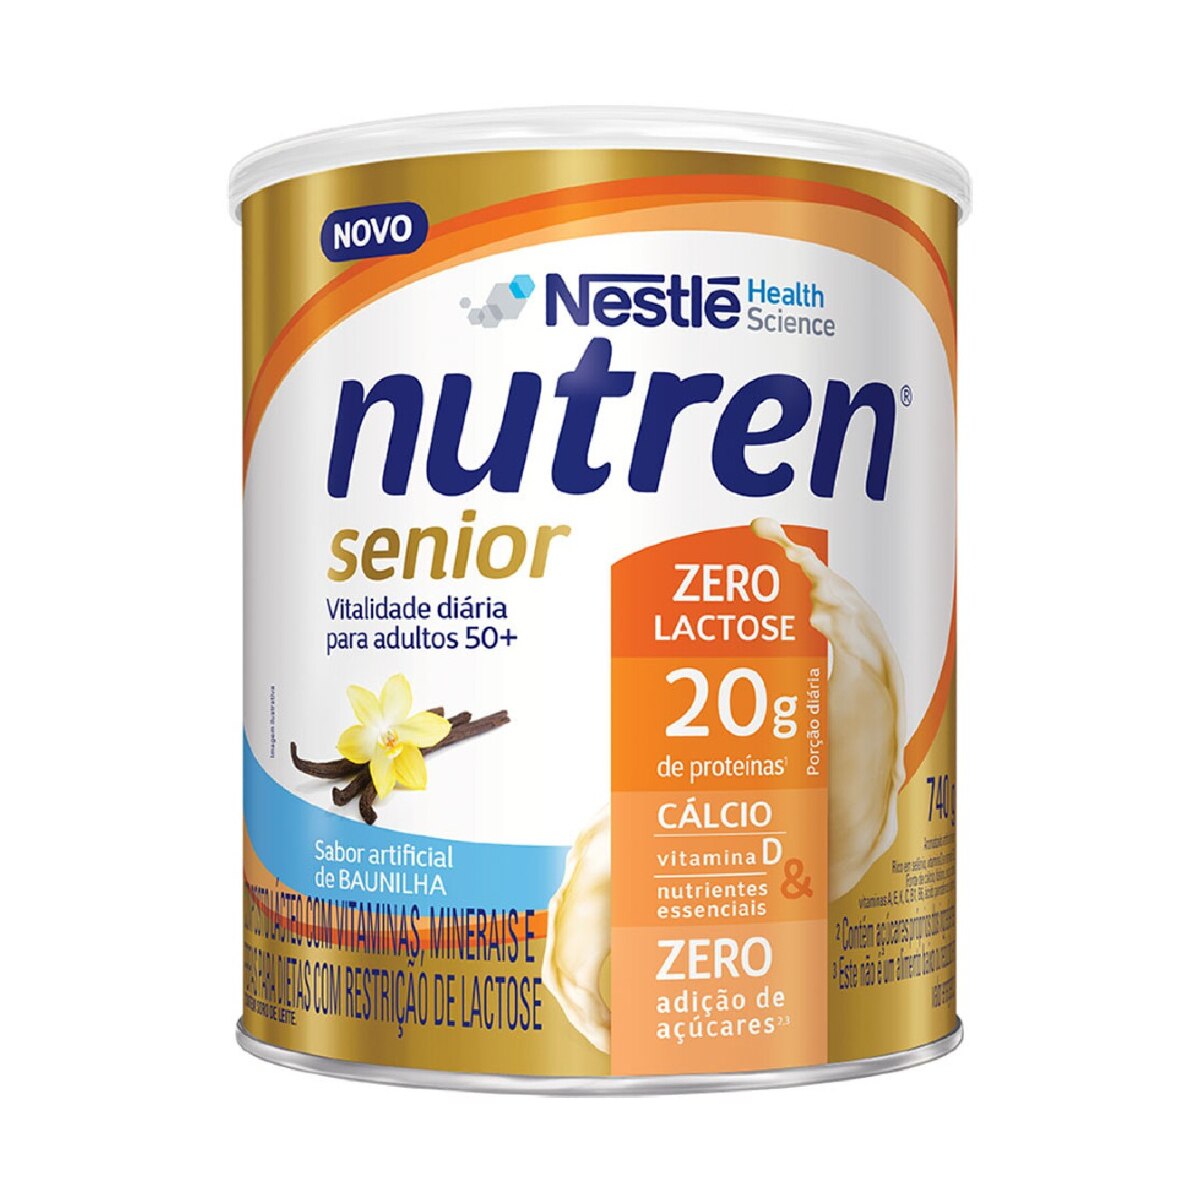 Nutren Senior Zero Lactose Sabor Baunilha 740g